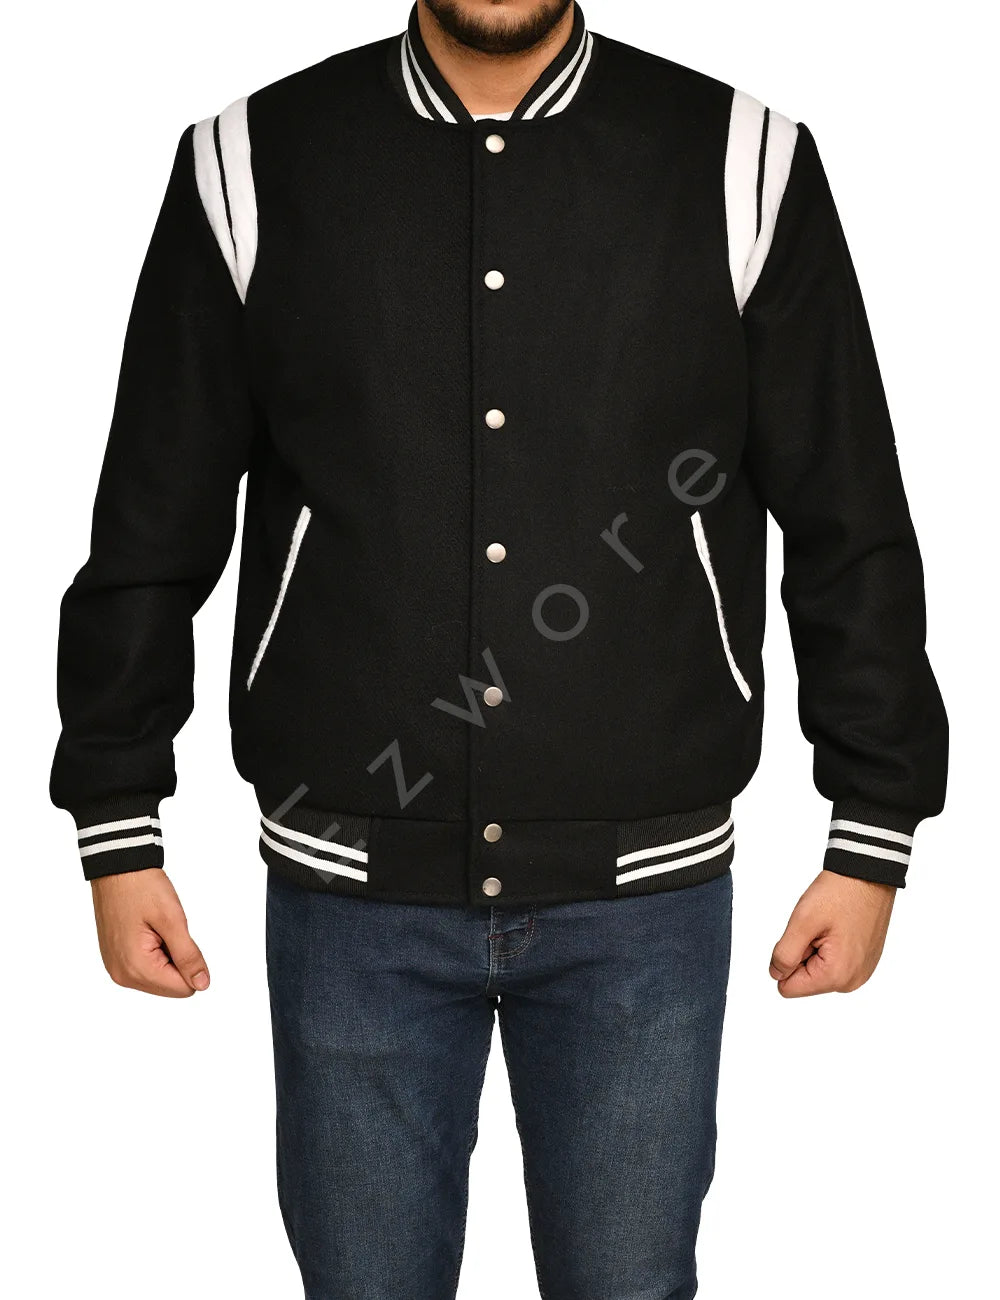 Men's Black Varsity Jacket